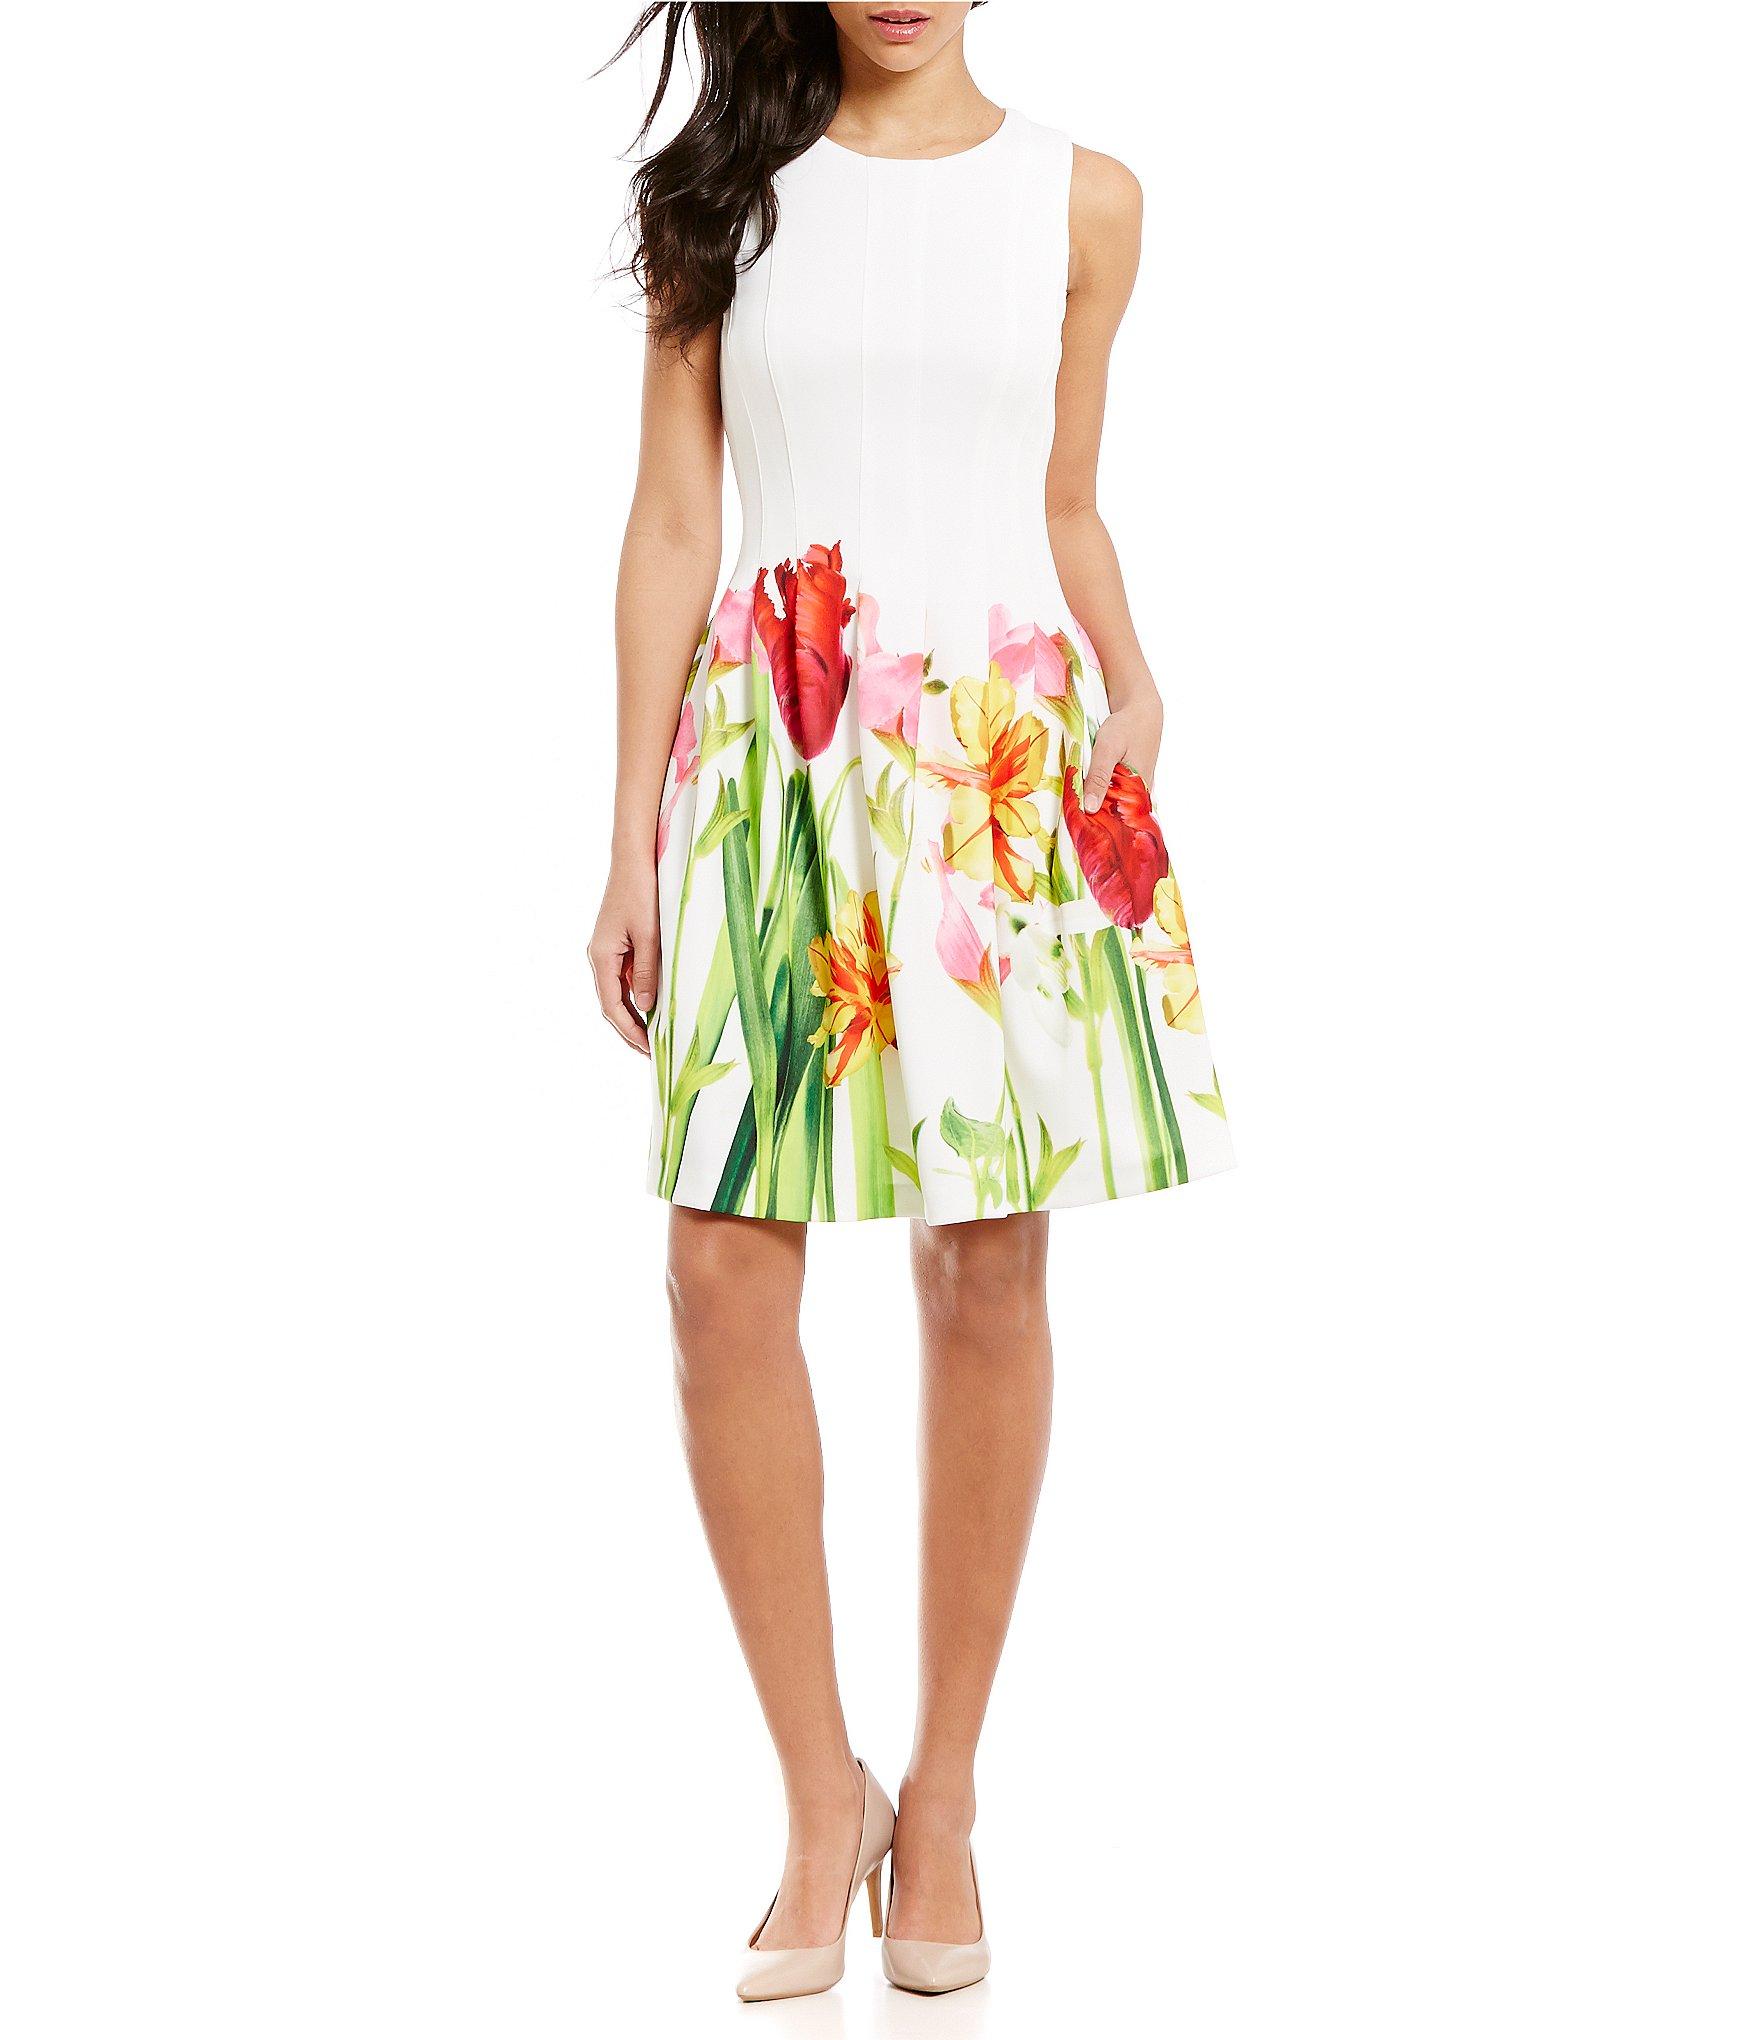 calvin klein white dress with flowers